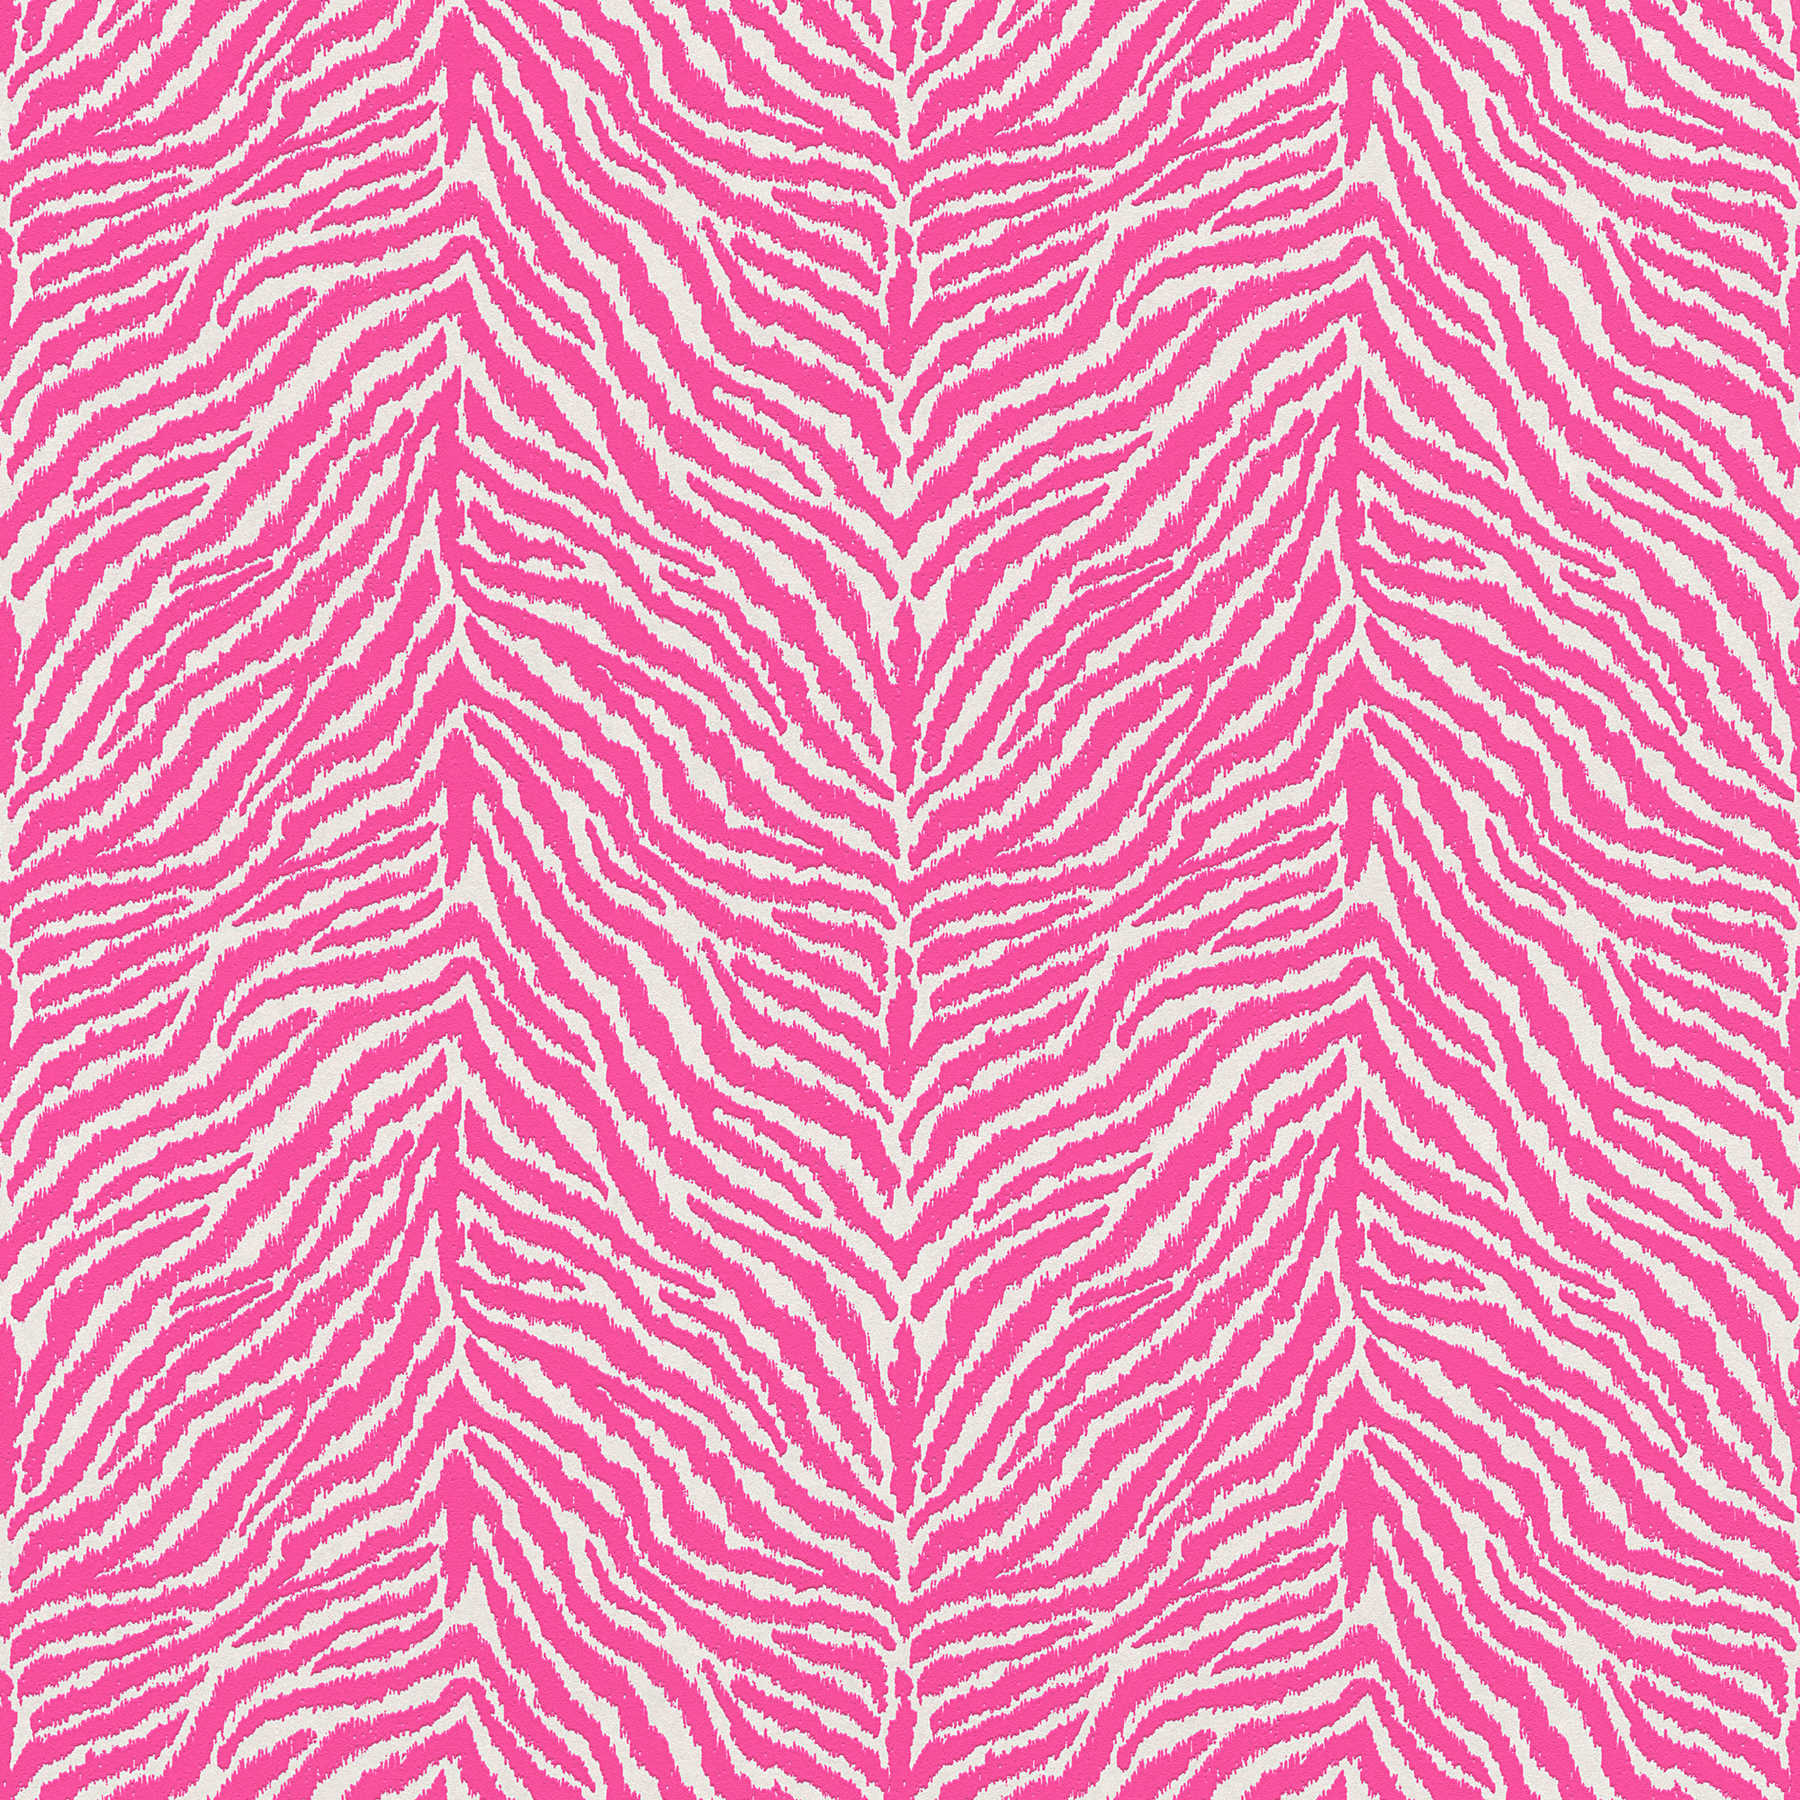         Animal Print Vliestapete Zebra-Muster – Rosa, Weiß
    